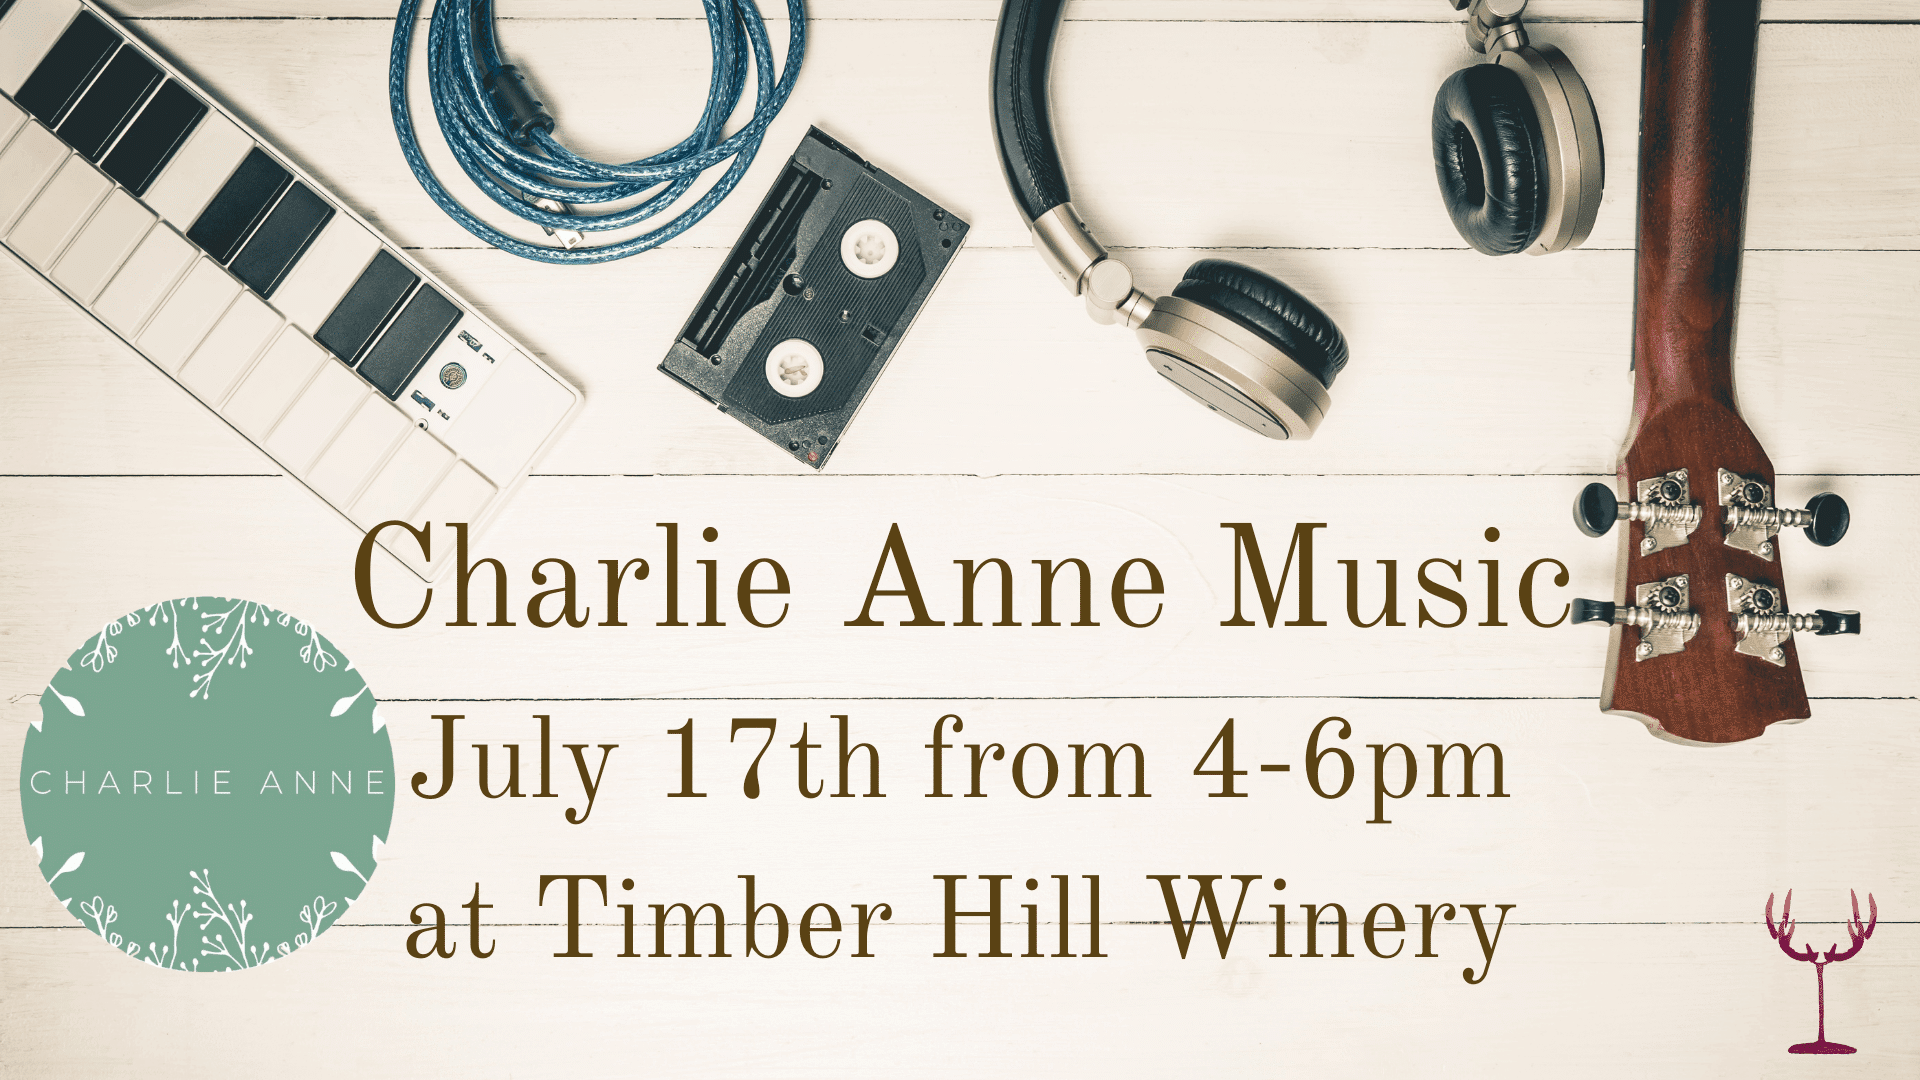 Charlie Anne Music July 17th